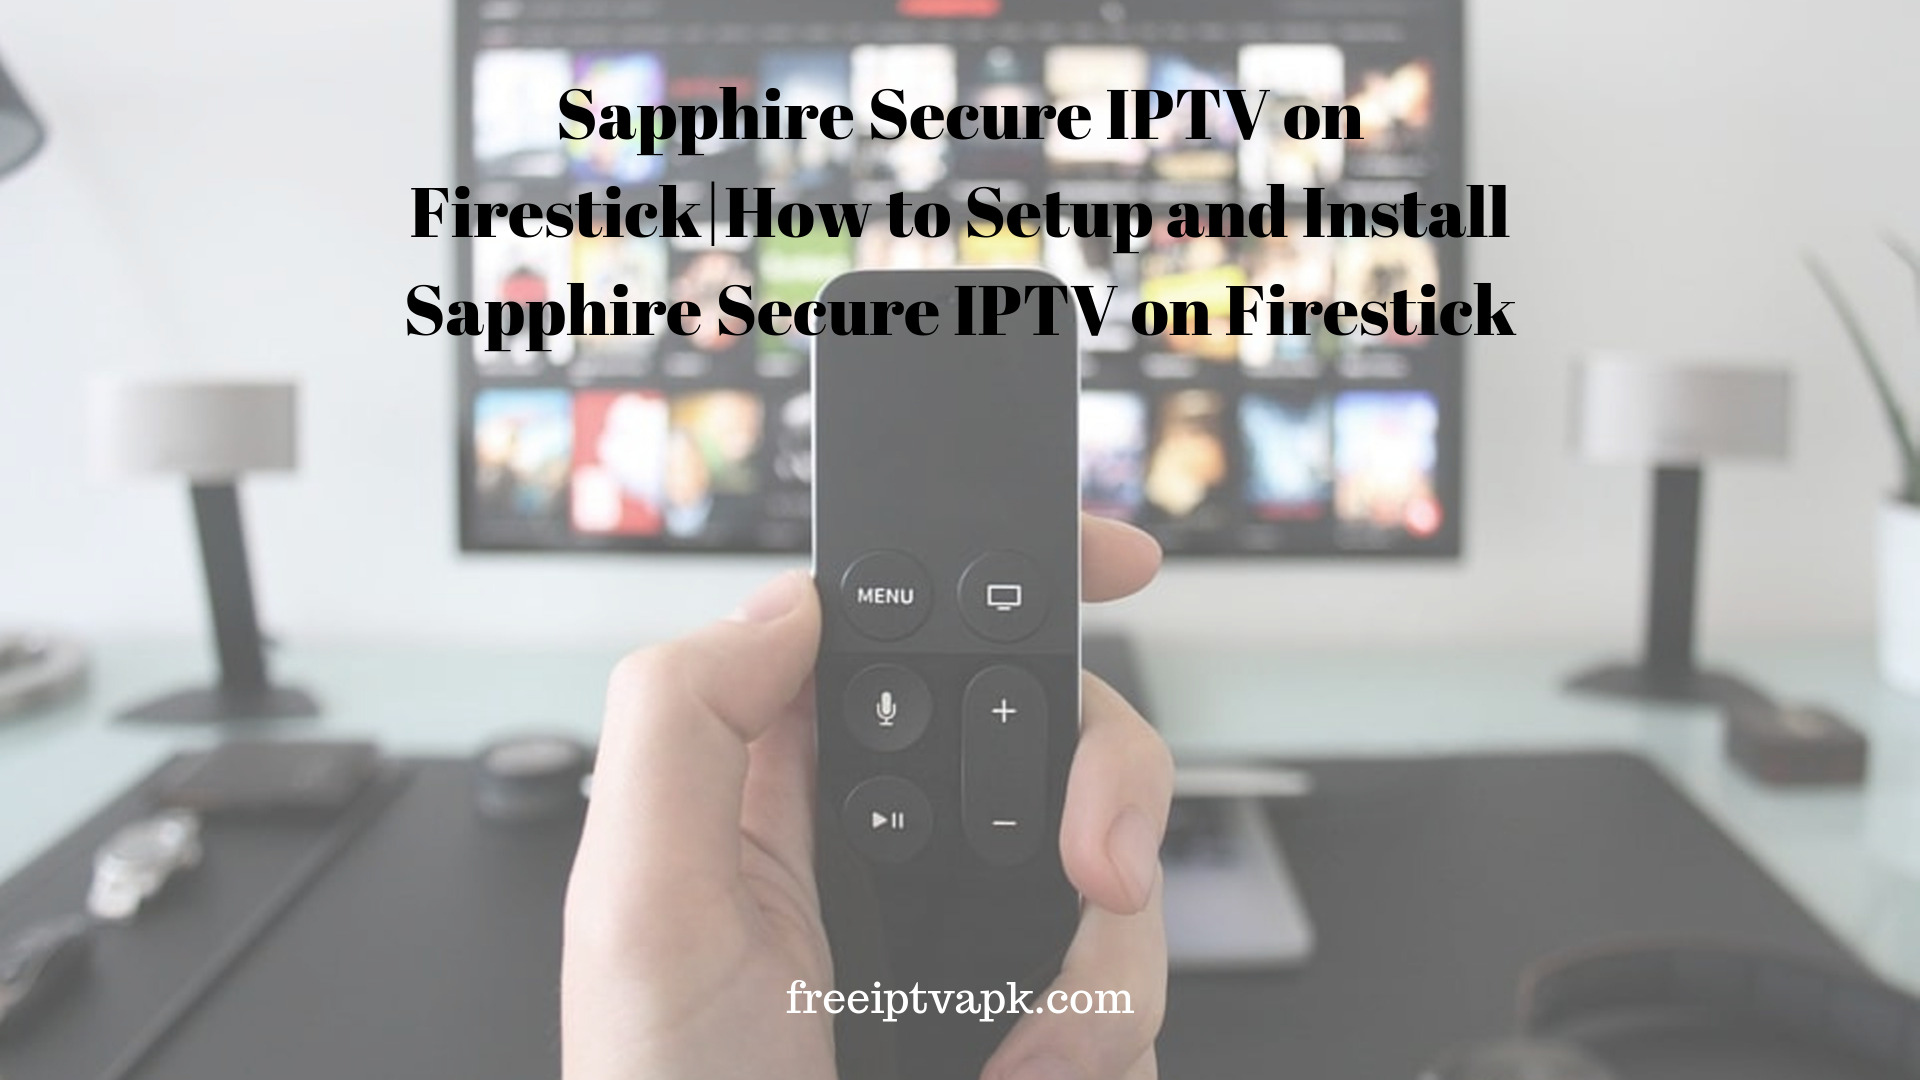 Sapphire Secure IPTV on Firestick|How to Setup and Install Sapphire Secure IPTV on Firestick